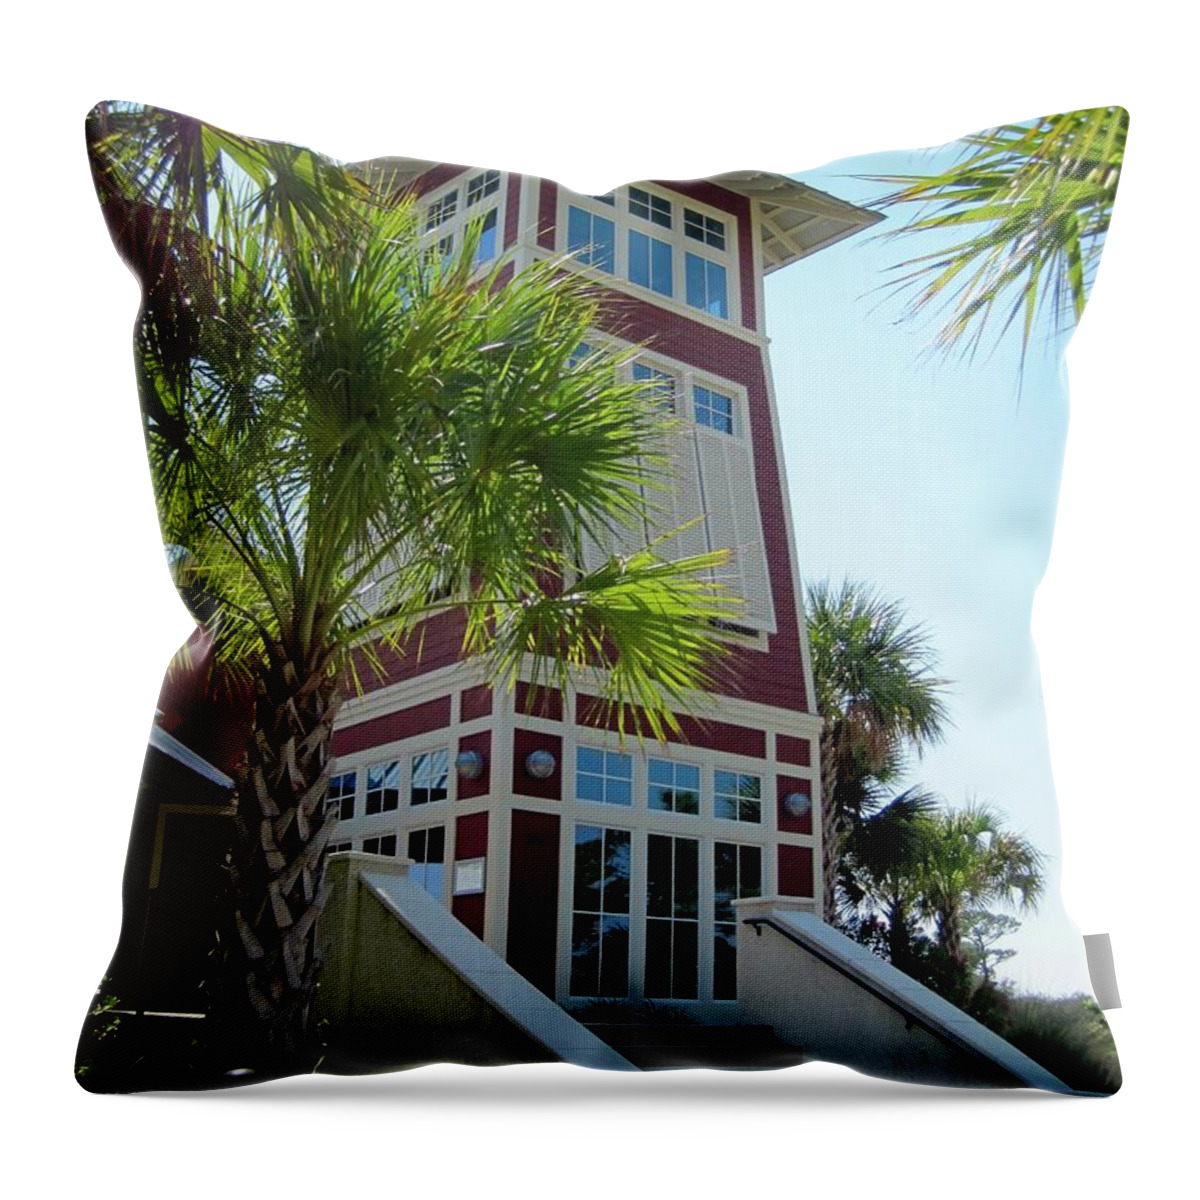 Cape San Blas Throw Pillow featuring the photograph Tropical View by Megan Cohen